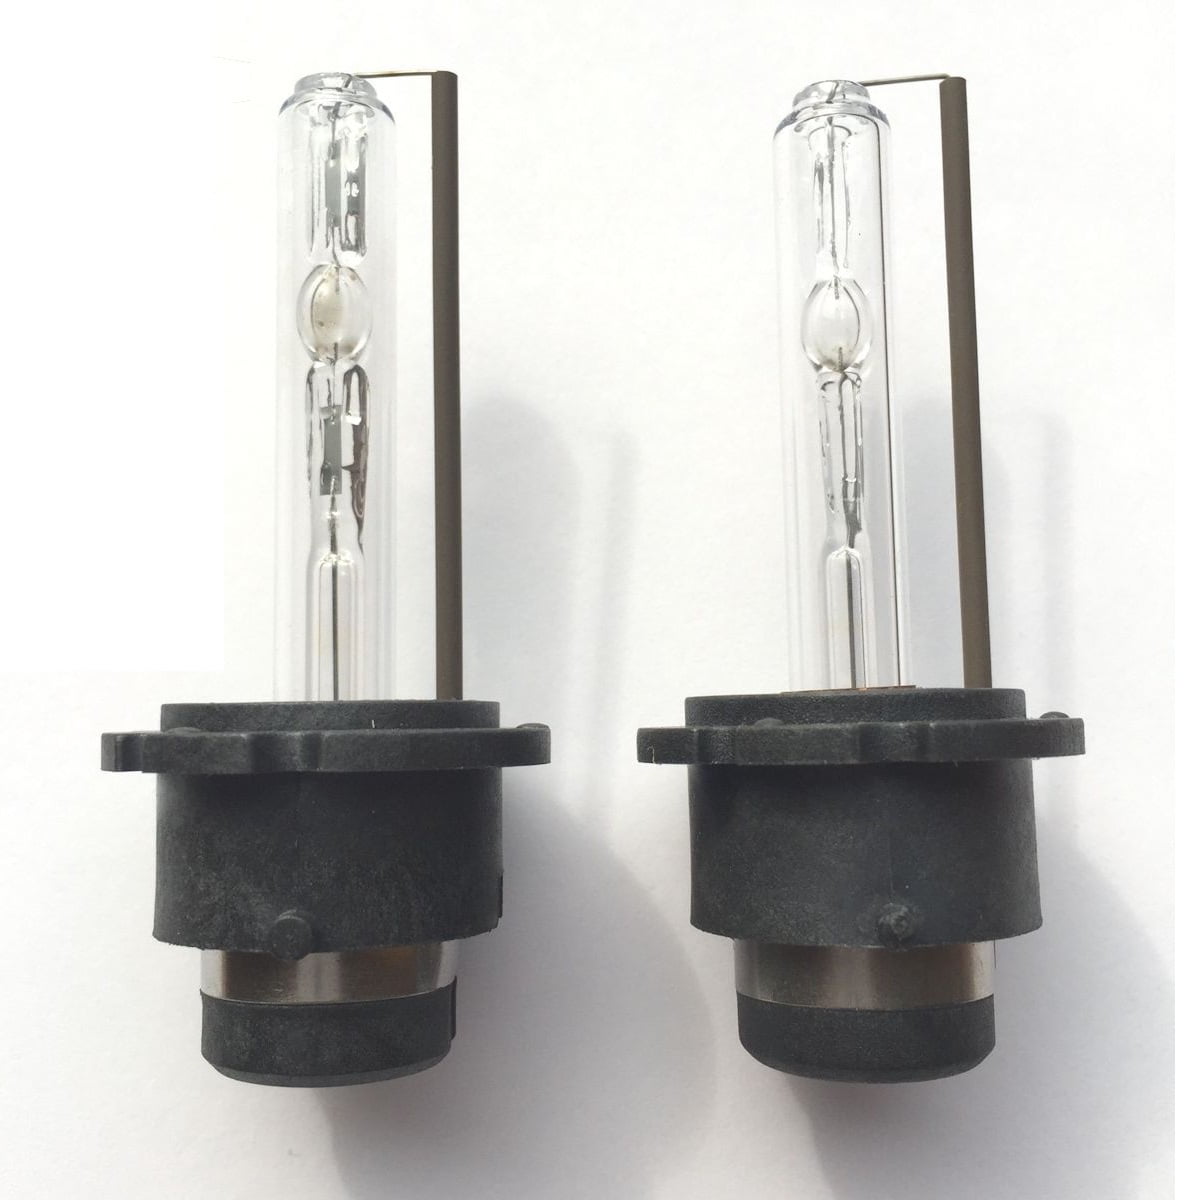 2PCS HID XENON Headlight Light Bulbs High Beam & Low Beam 6000K D2R A